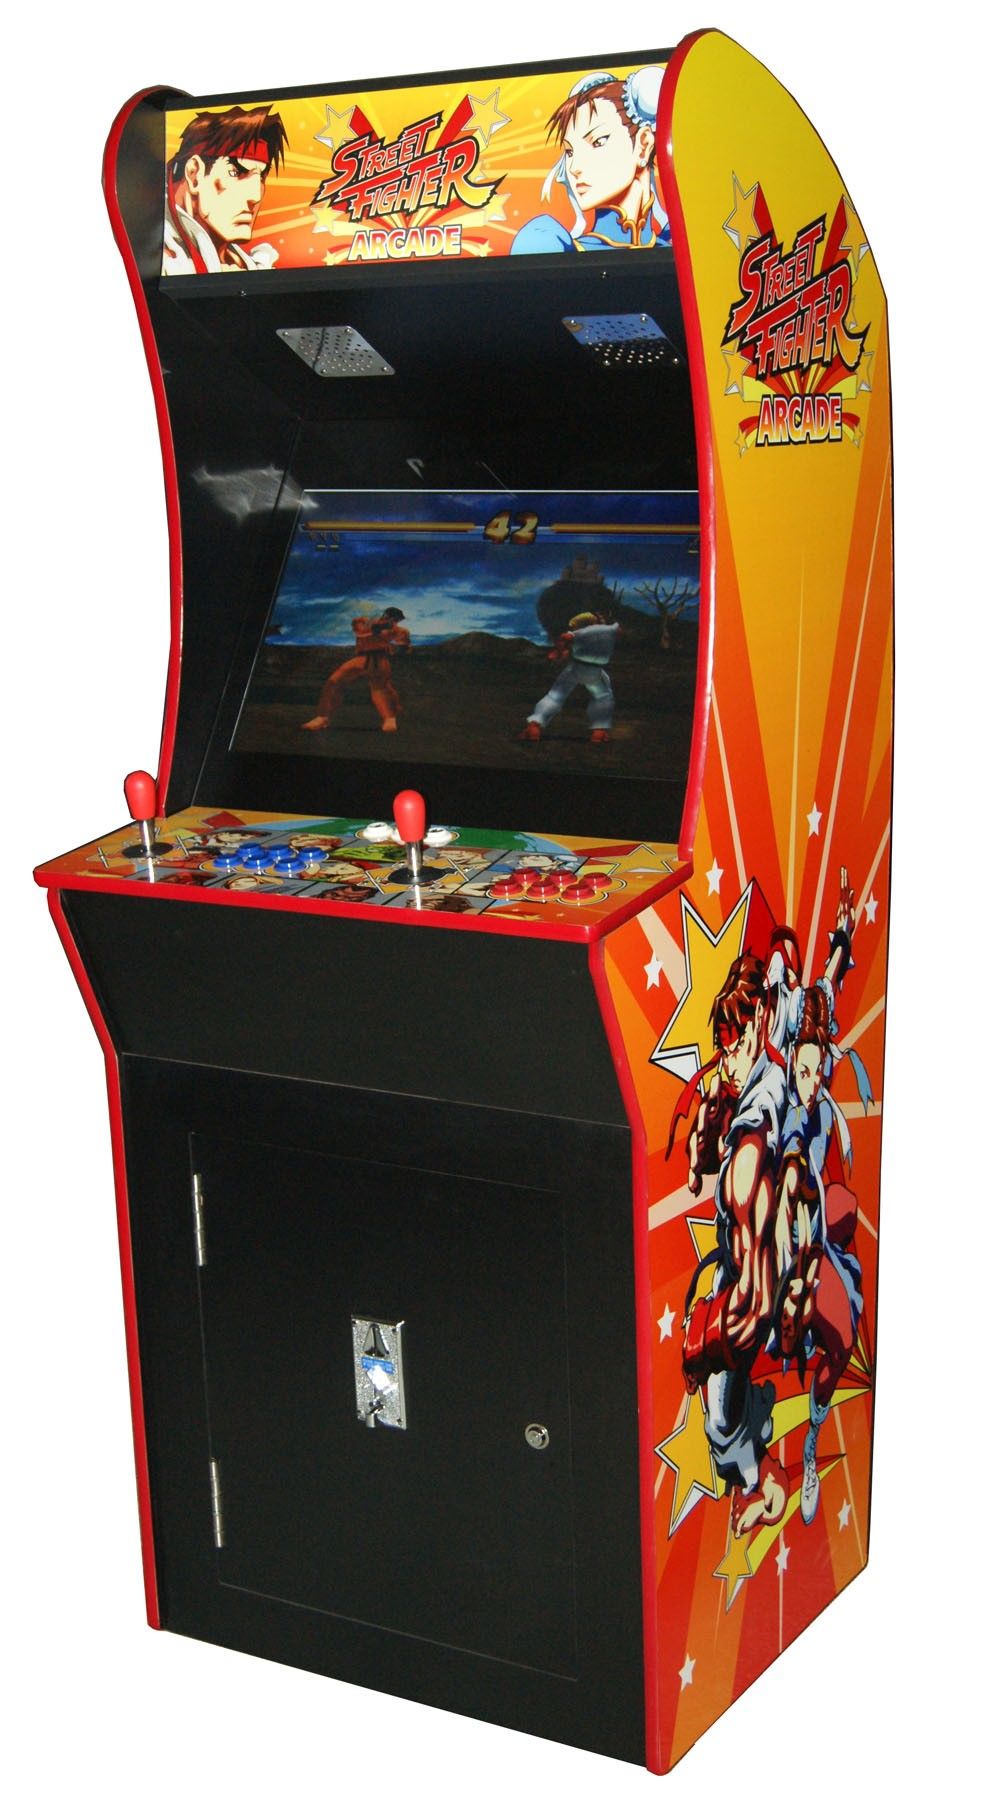 Original Street Fighter Arcade Game